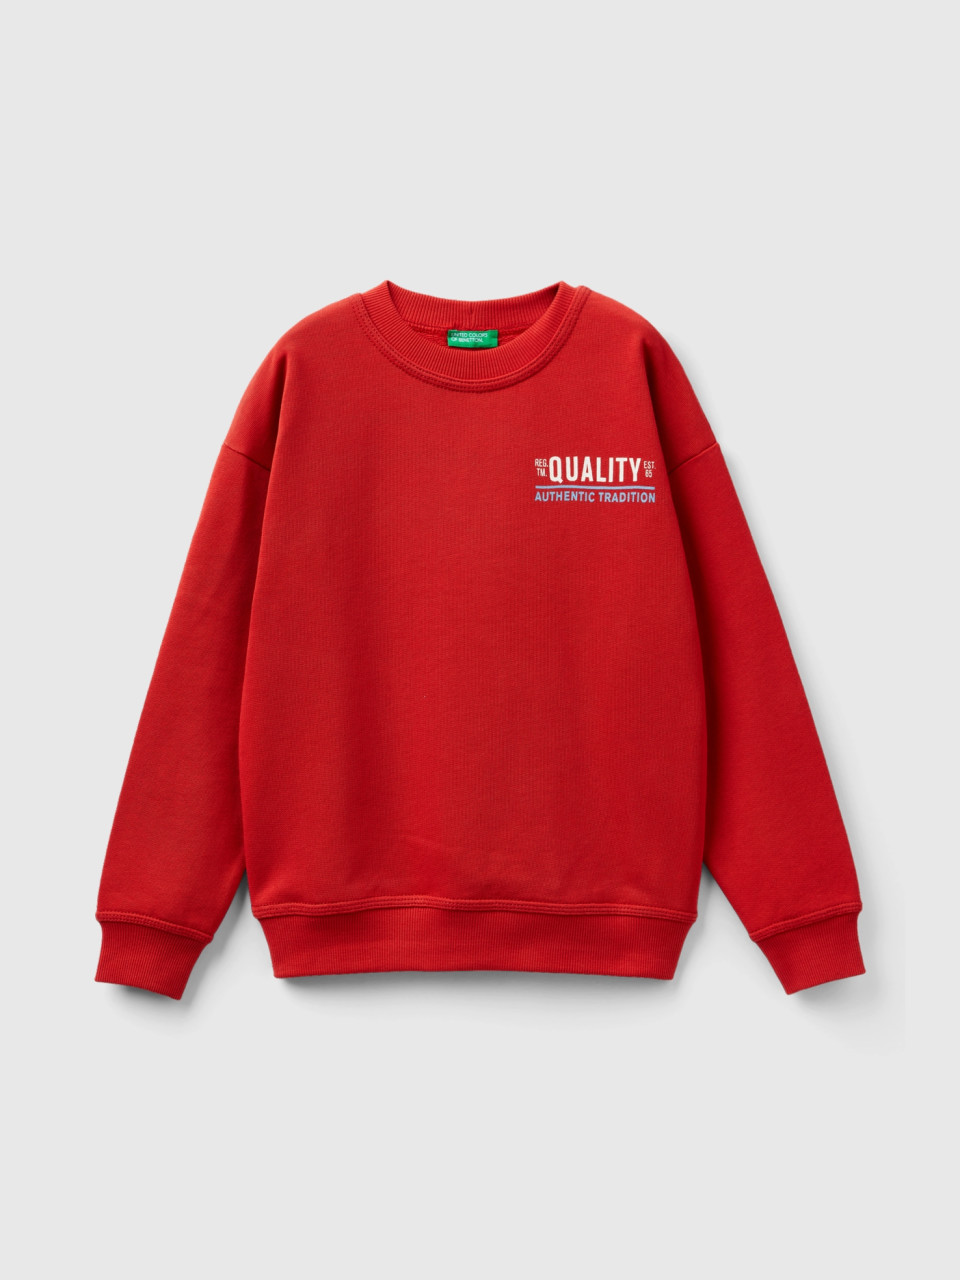 Benetton, Oversized Sweatshirt With Print, Red, Kids